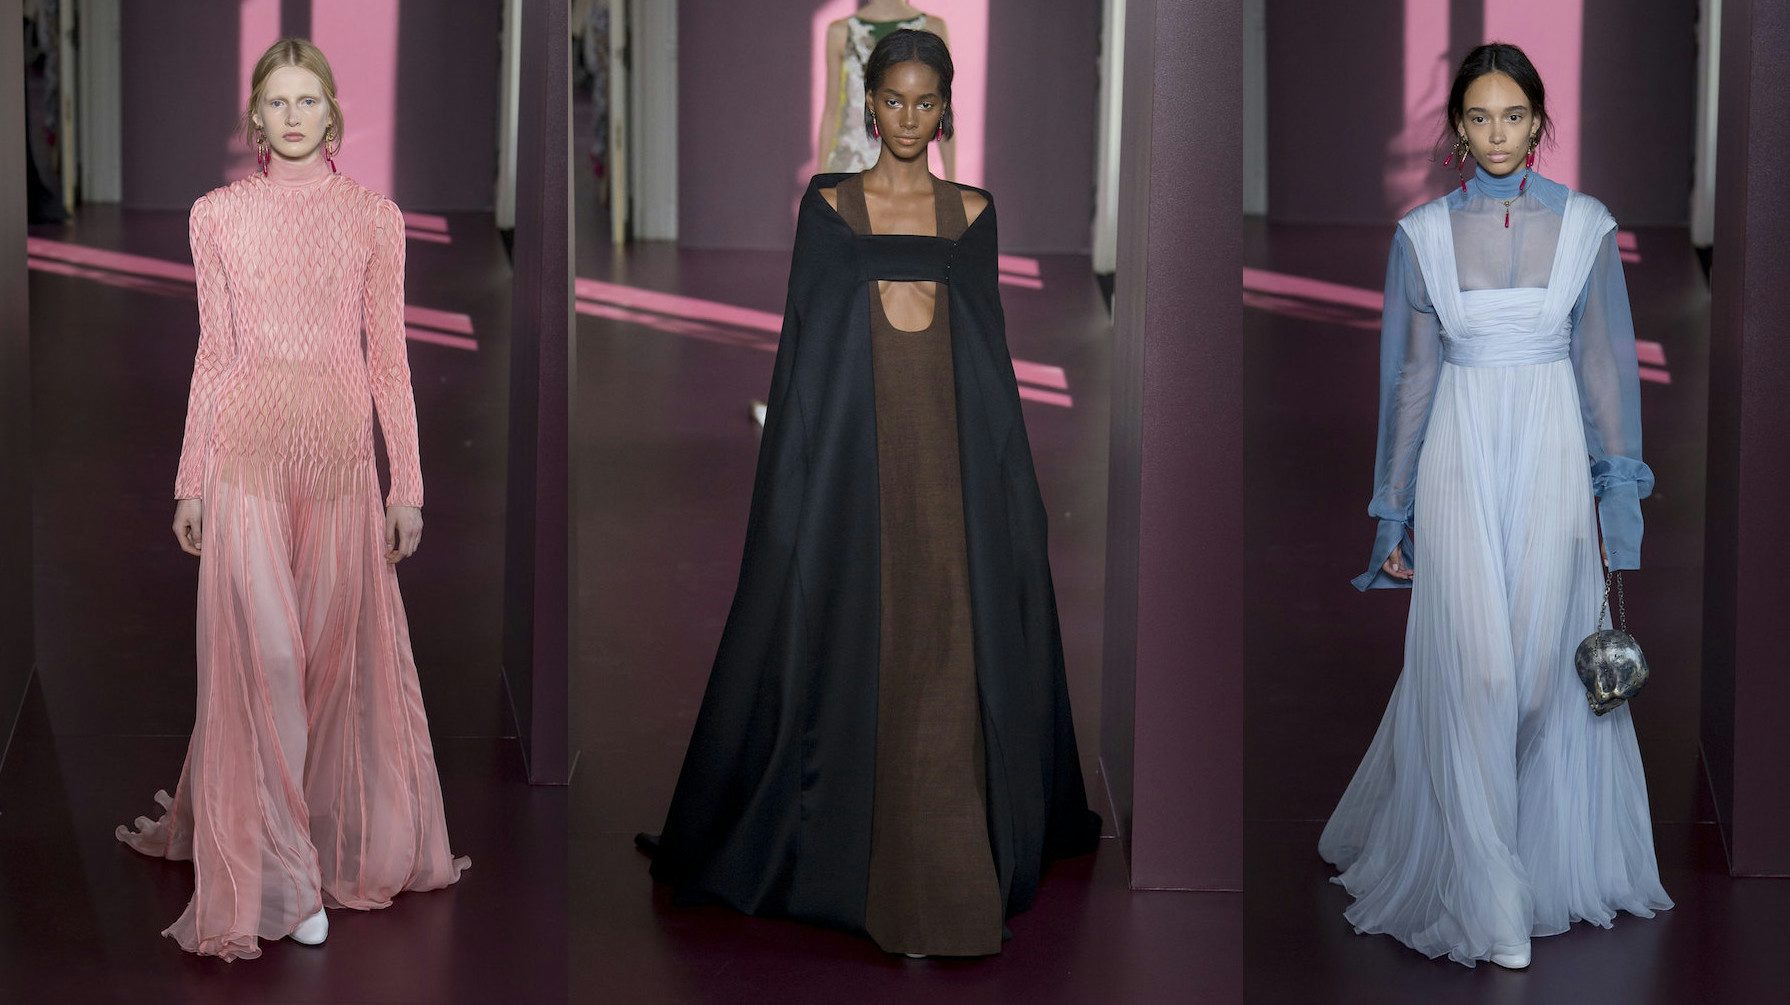 Confusion Reigns at Paris Couture | Fashion Show Review, Multiple ...